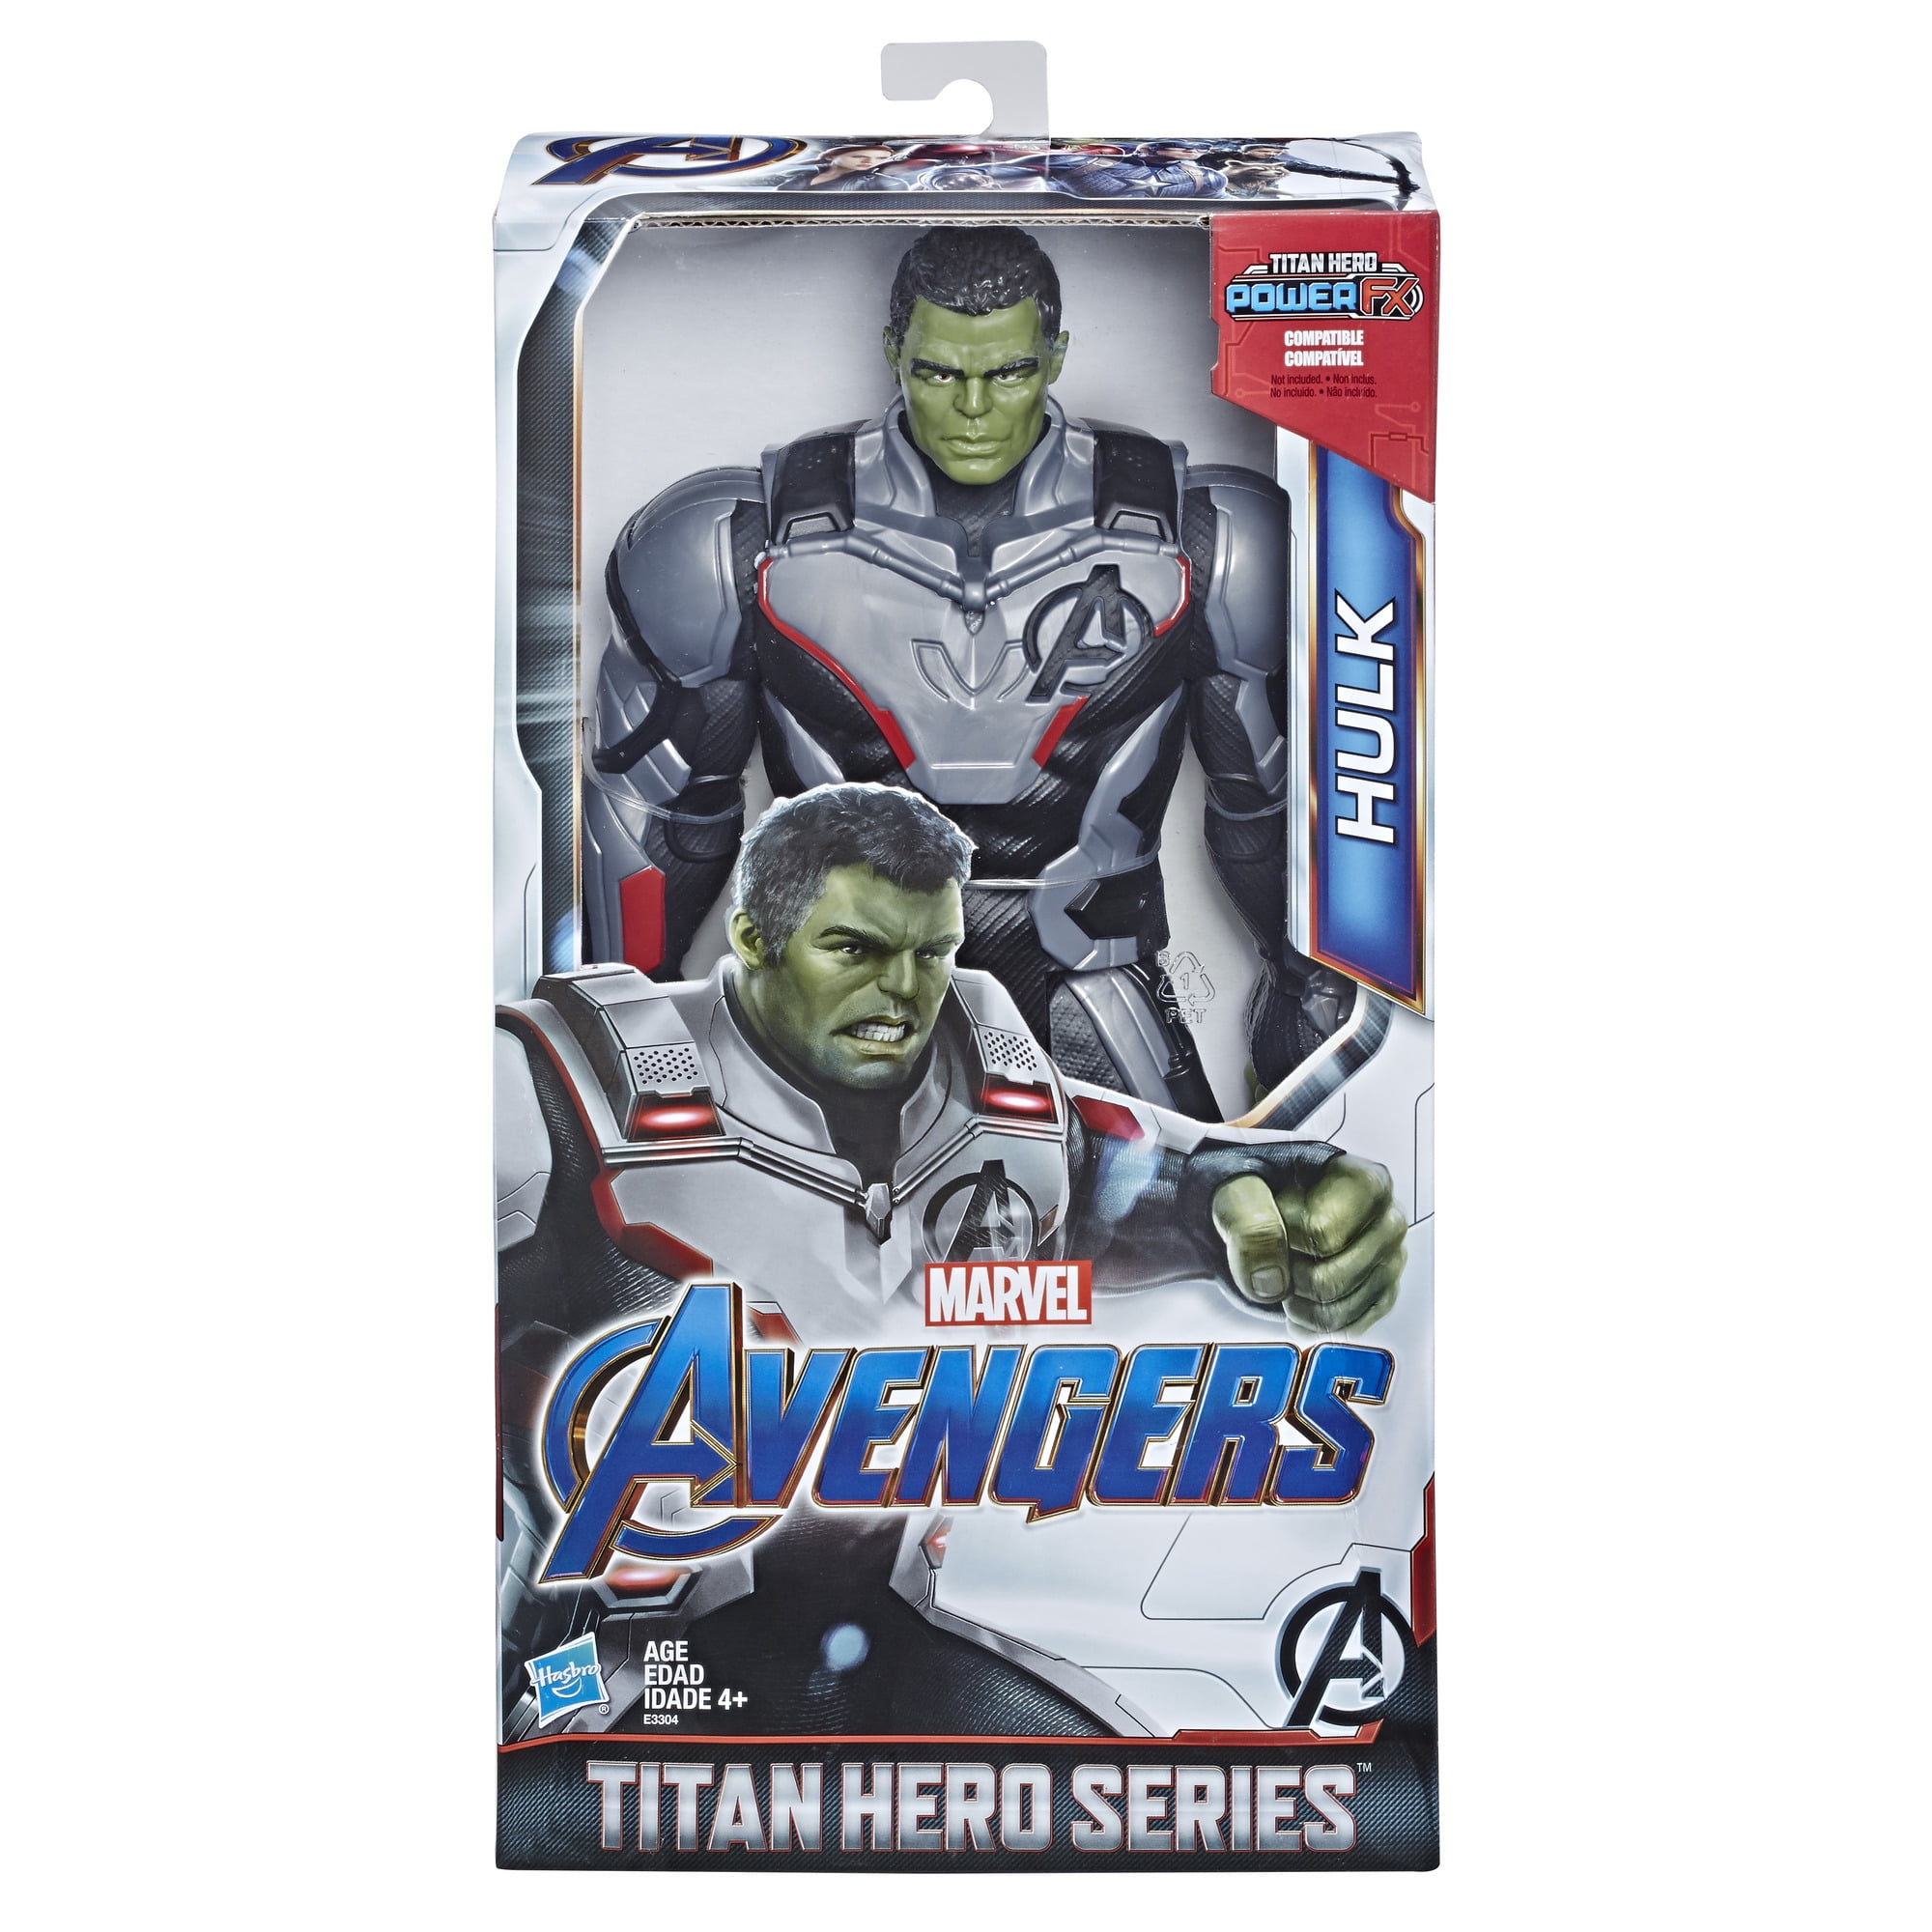 Marvel Avengers Titan Hero Series 12 Inch Action Figures Kids Toy Gift Super 